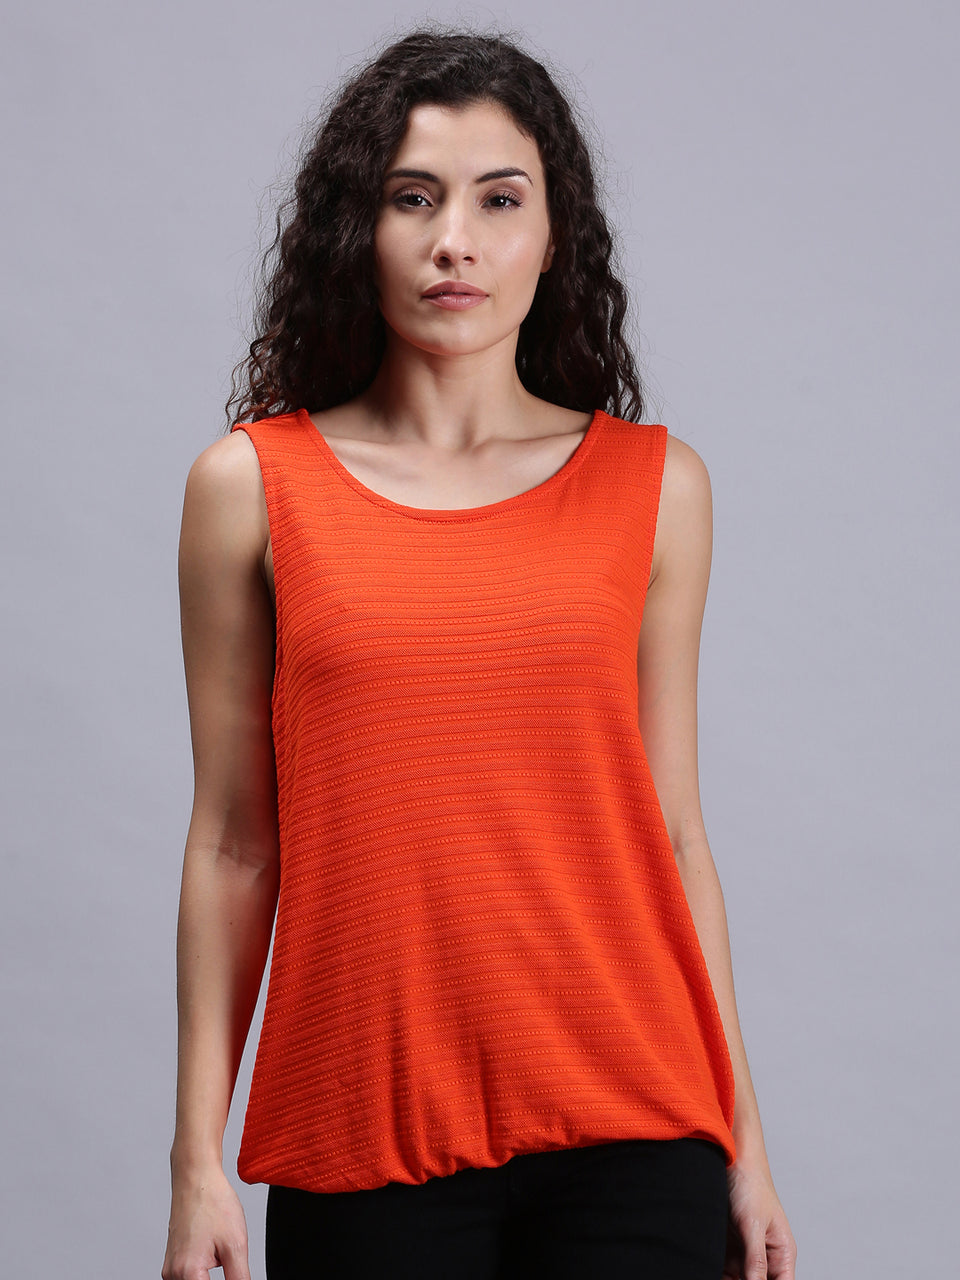 women solid orange sleeveless tank tops